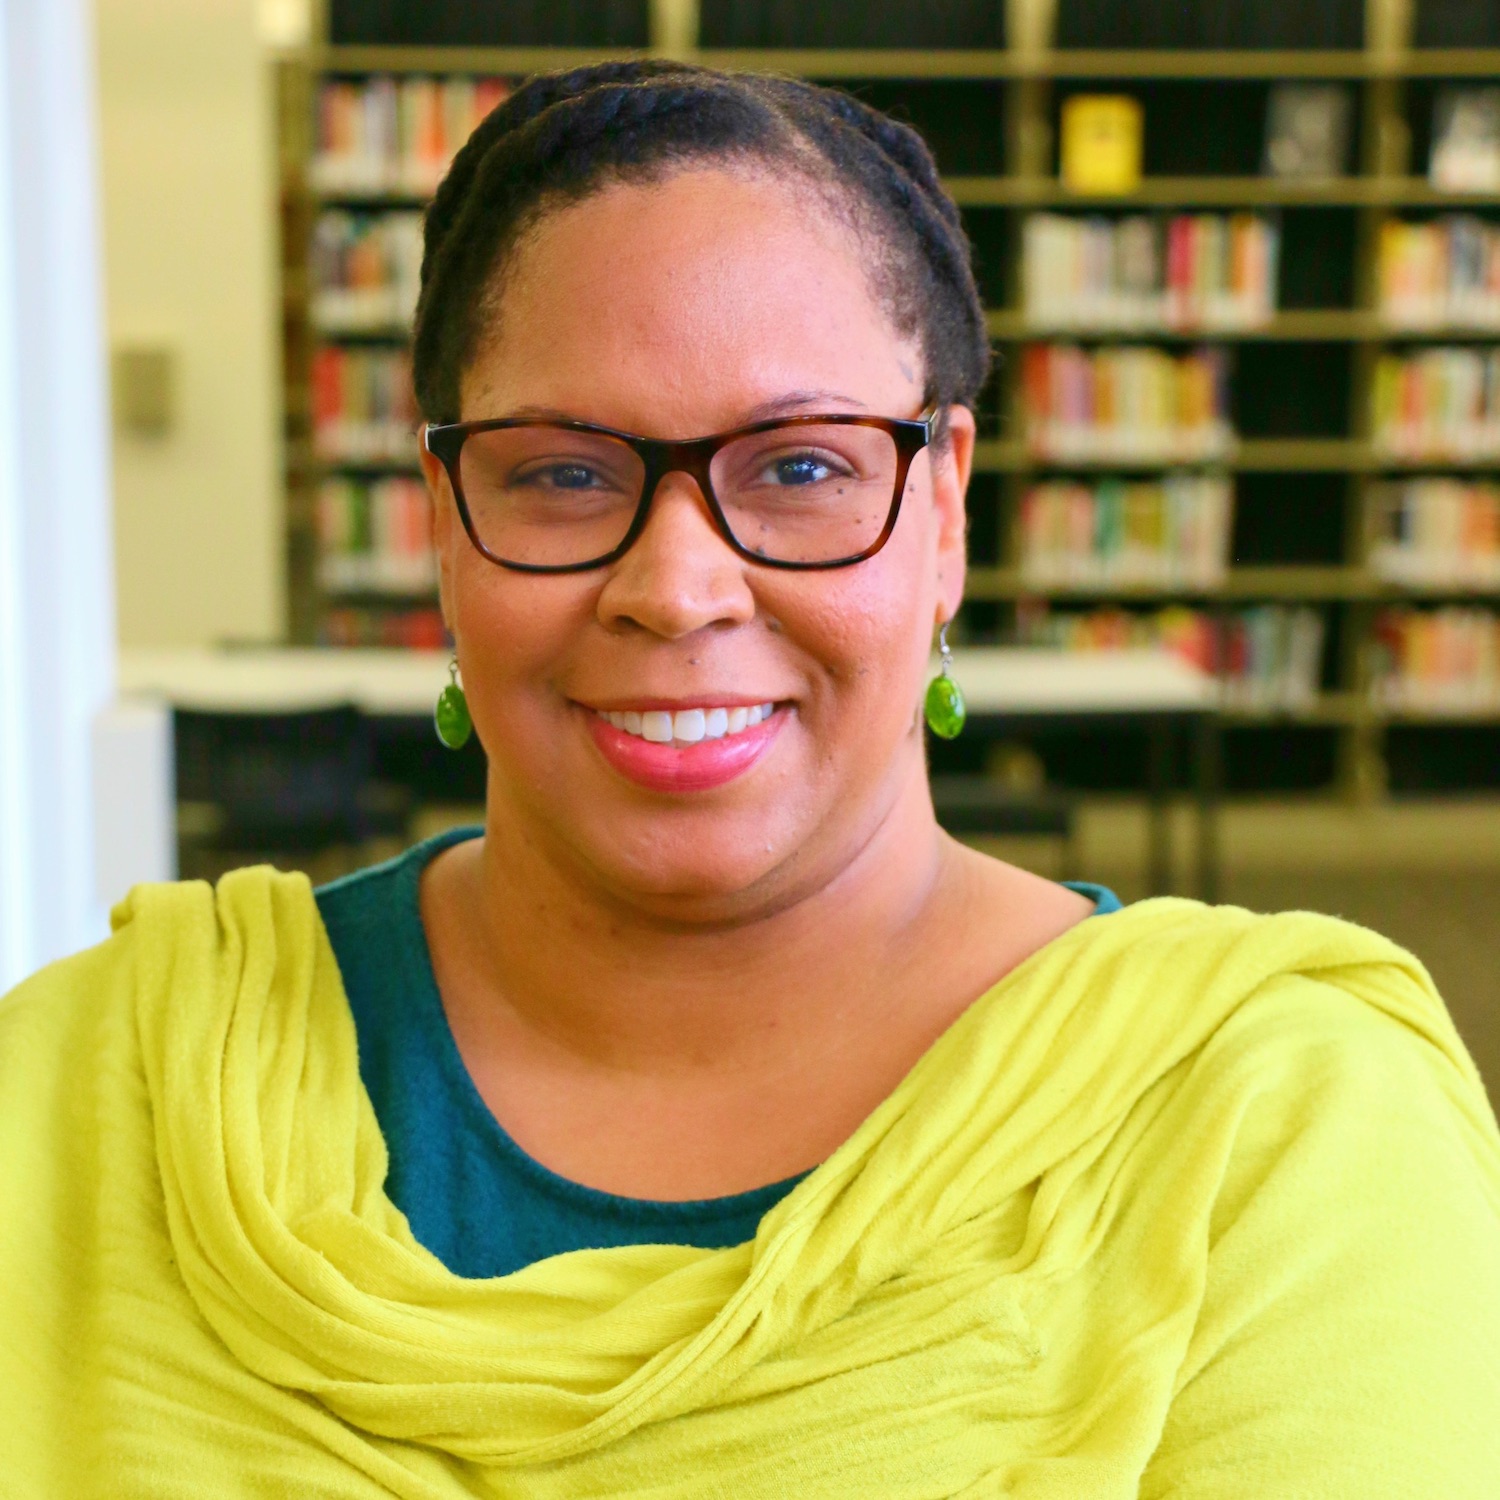 Kaetrena Davis Kendrick on Low Morale Among Academic Librarians